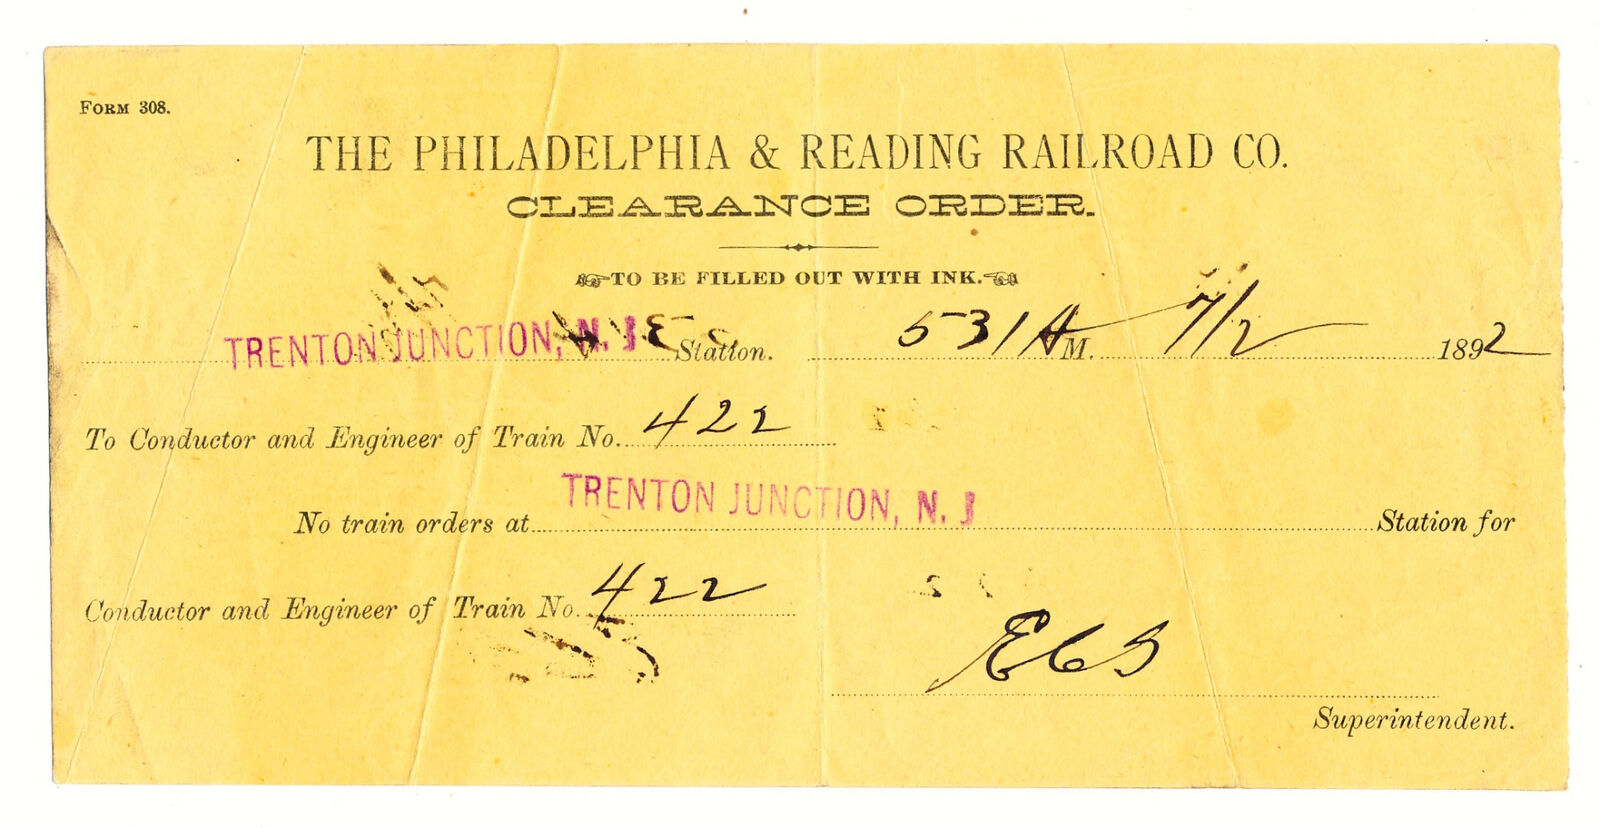 1892 - PHILADELPHIA & READING RAILROAD CO CLEARANCE ORDER - TRENTON JUNCTION NJ